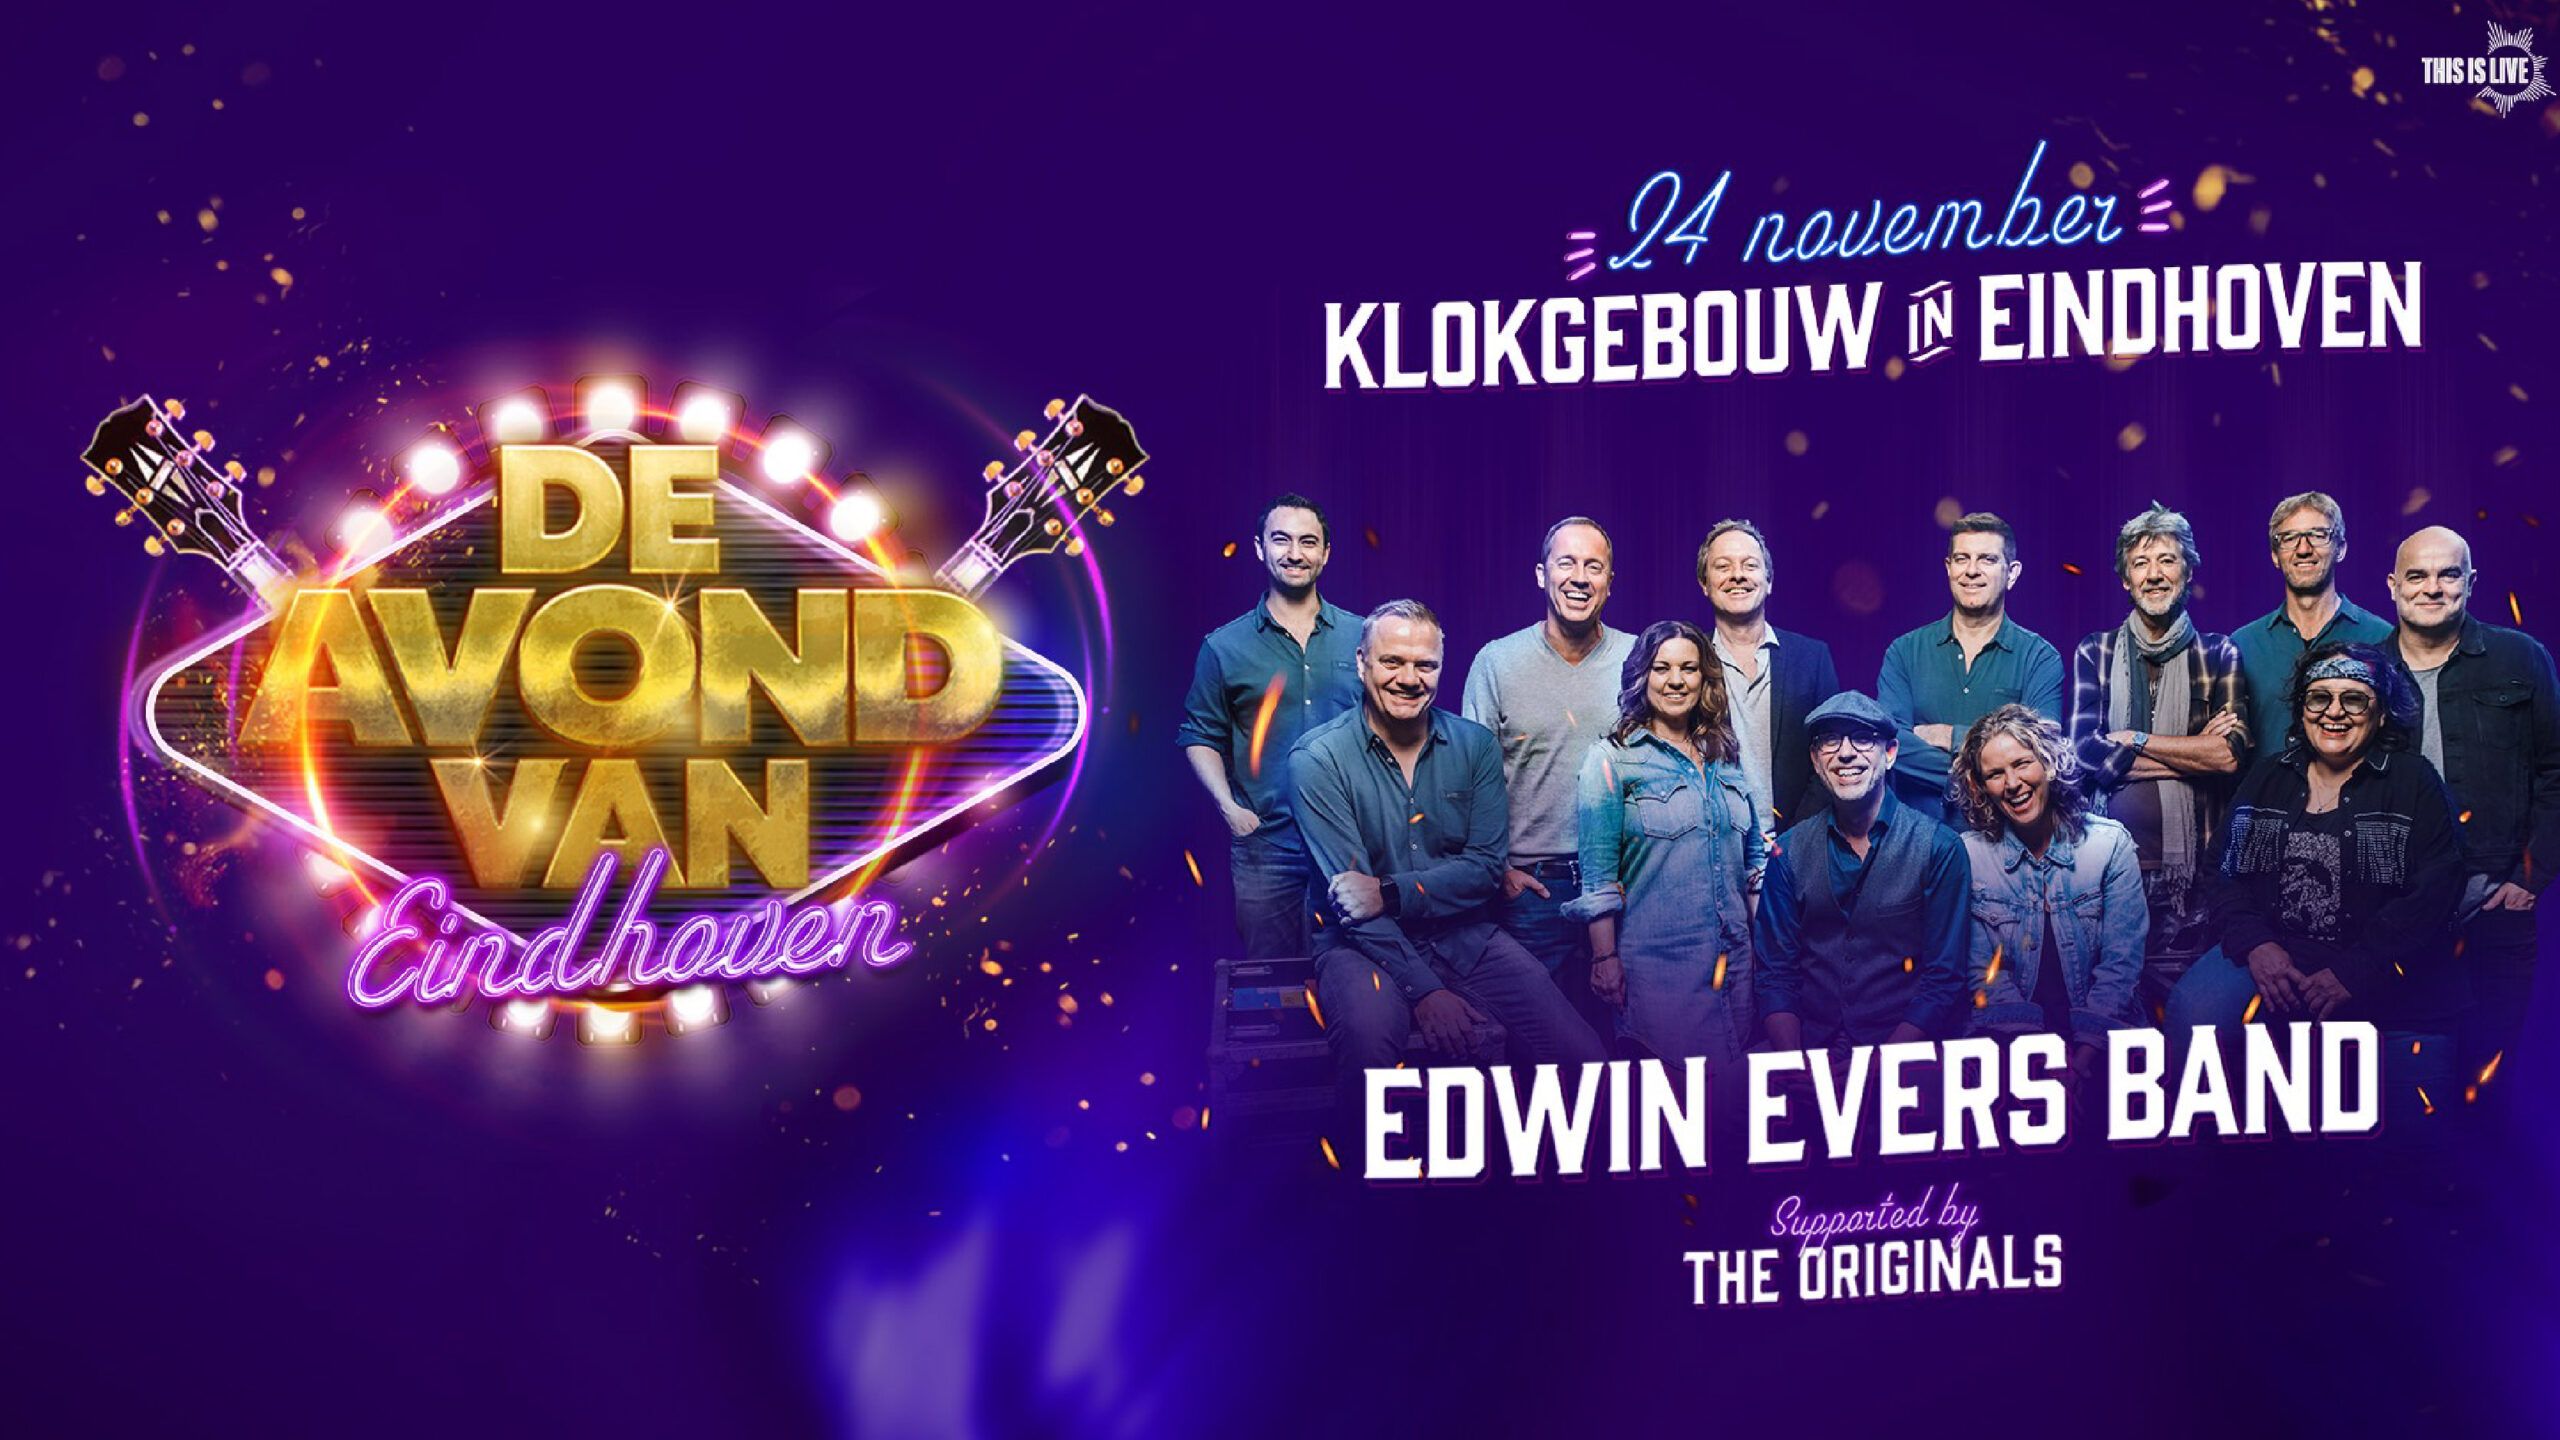 De Avond van Edwin Evers Band LIVE - Eindhoven cover